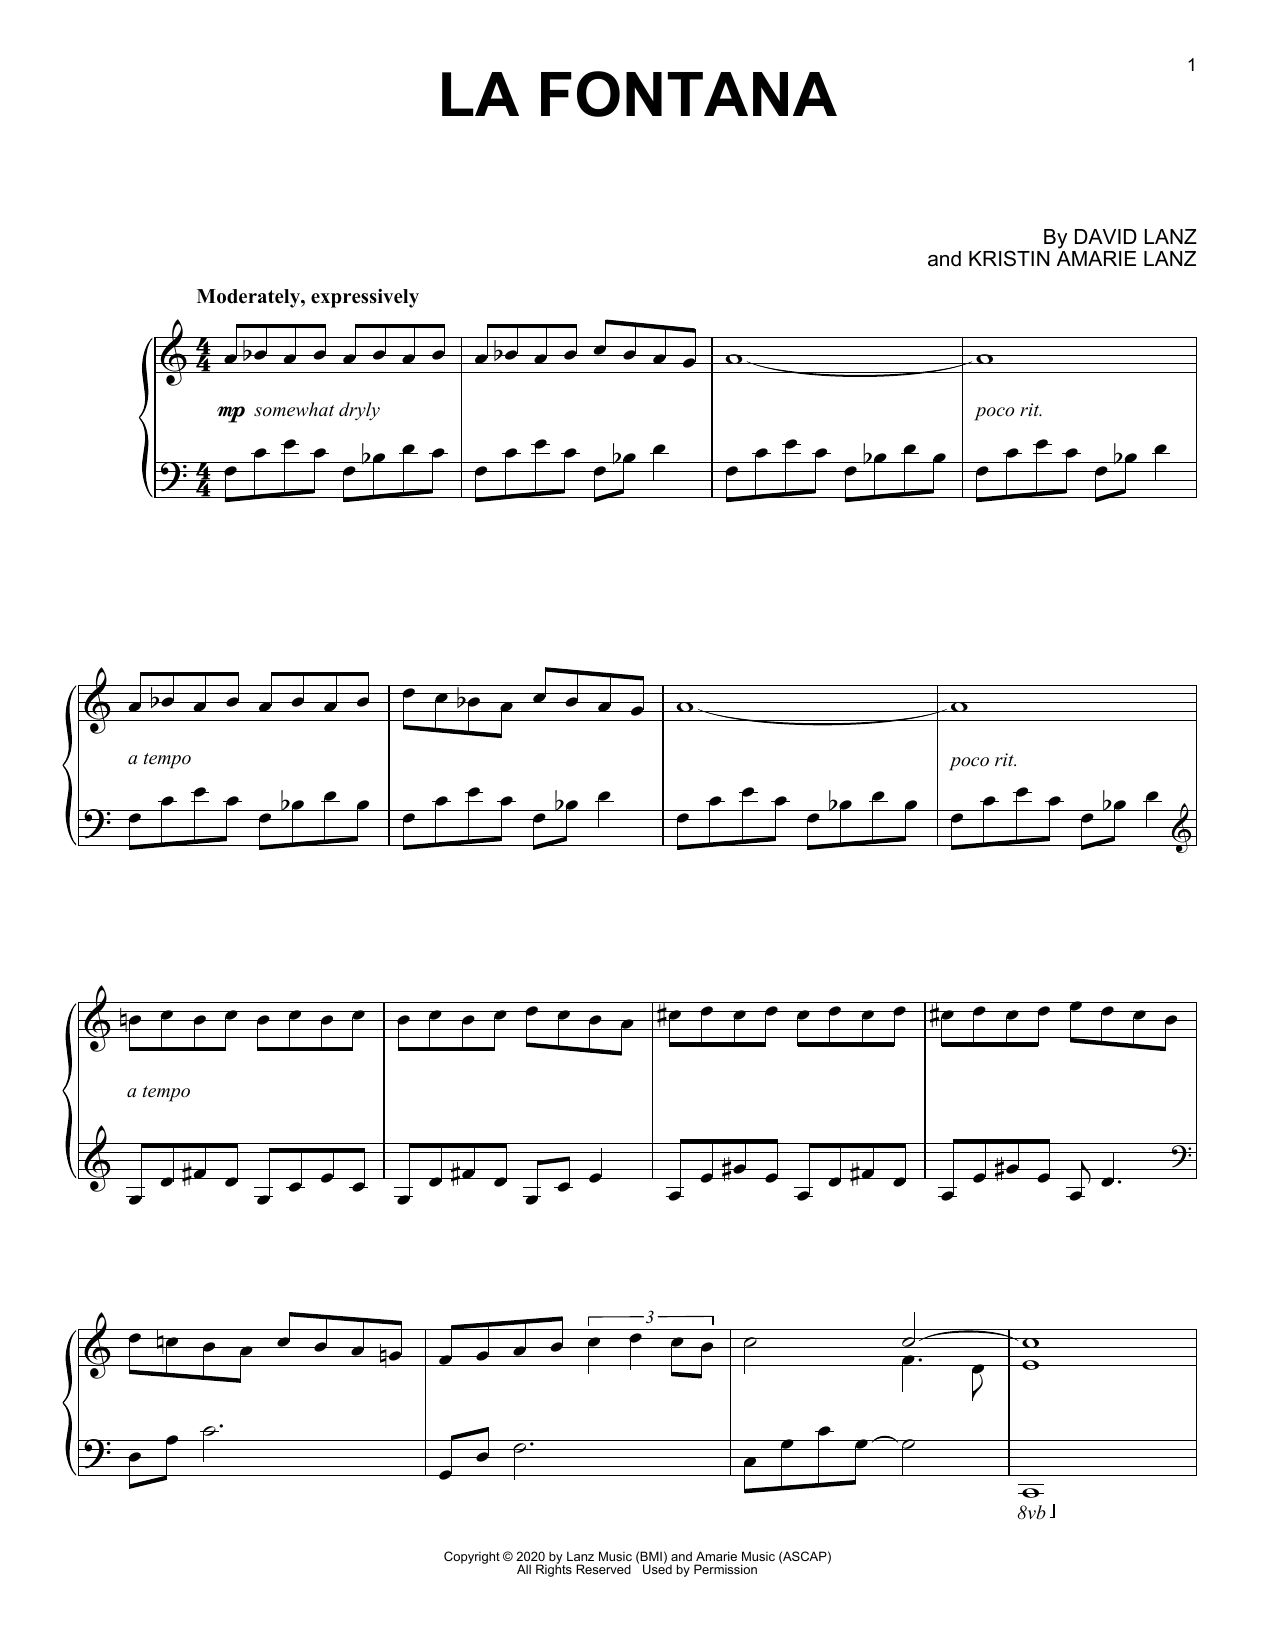 David Lanz La Fontana Sheet Music Notes & Chords for Piano Solo - Download or Print PDF